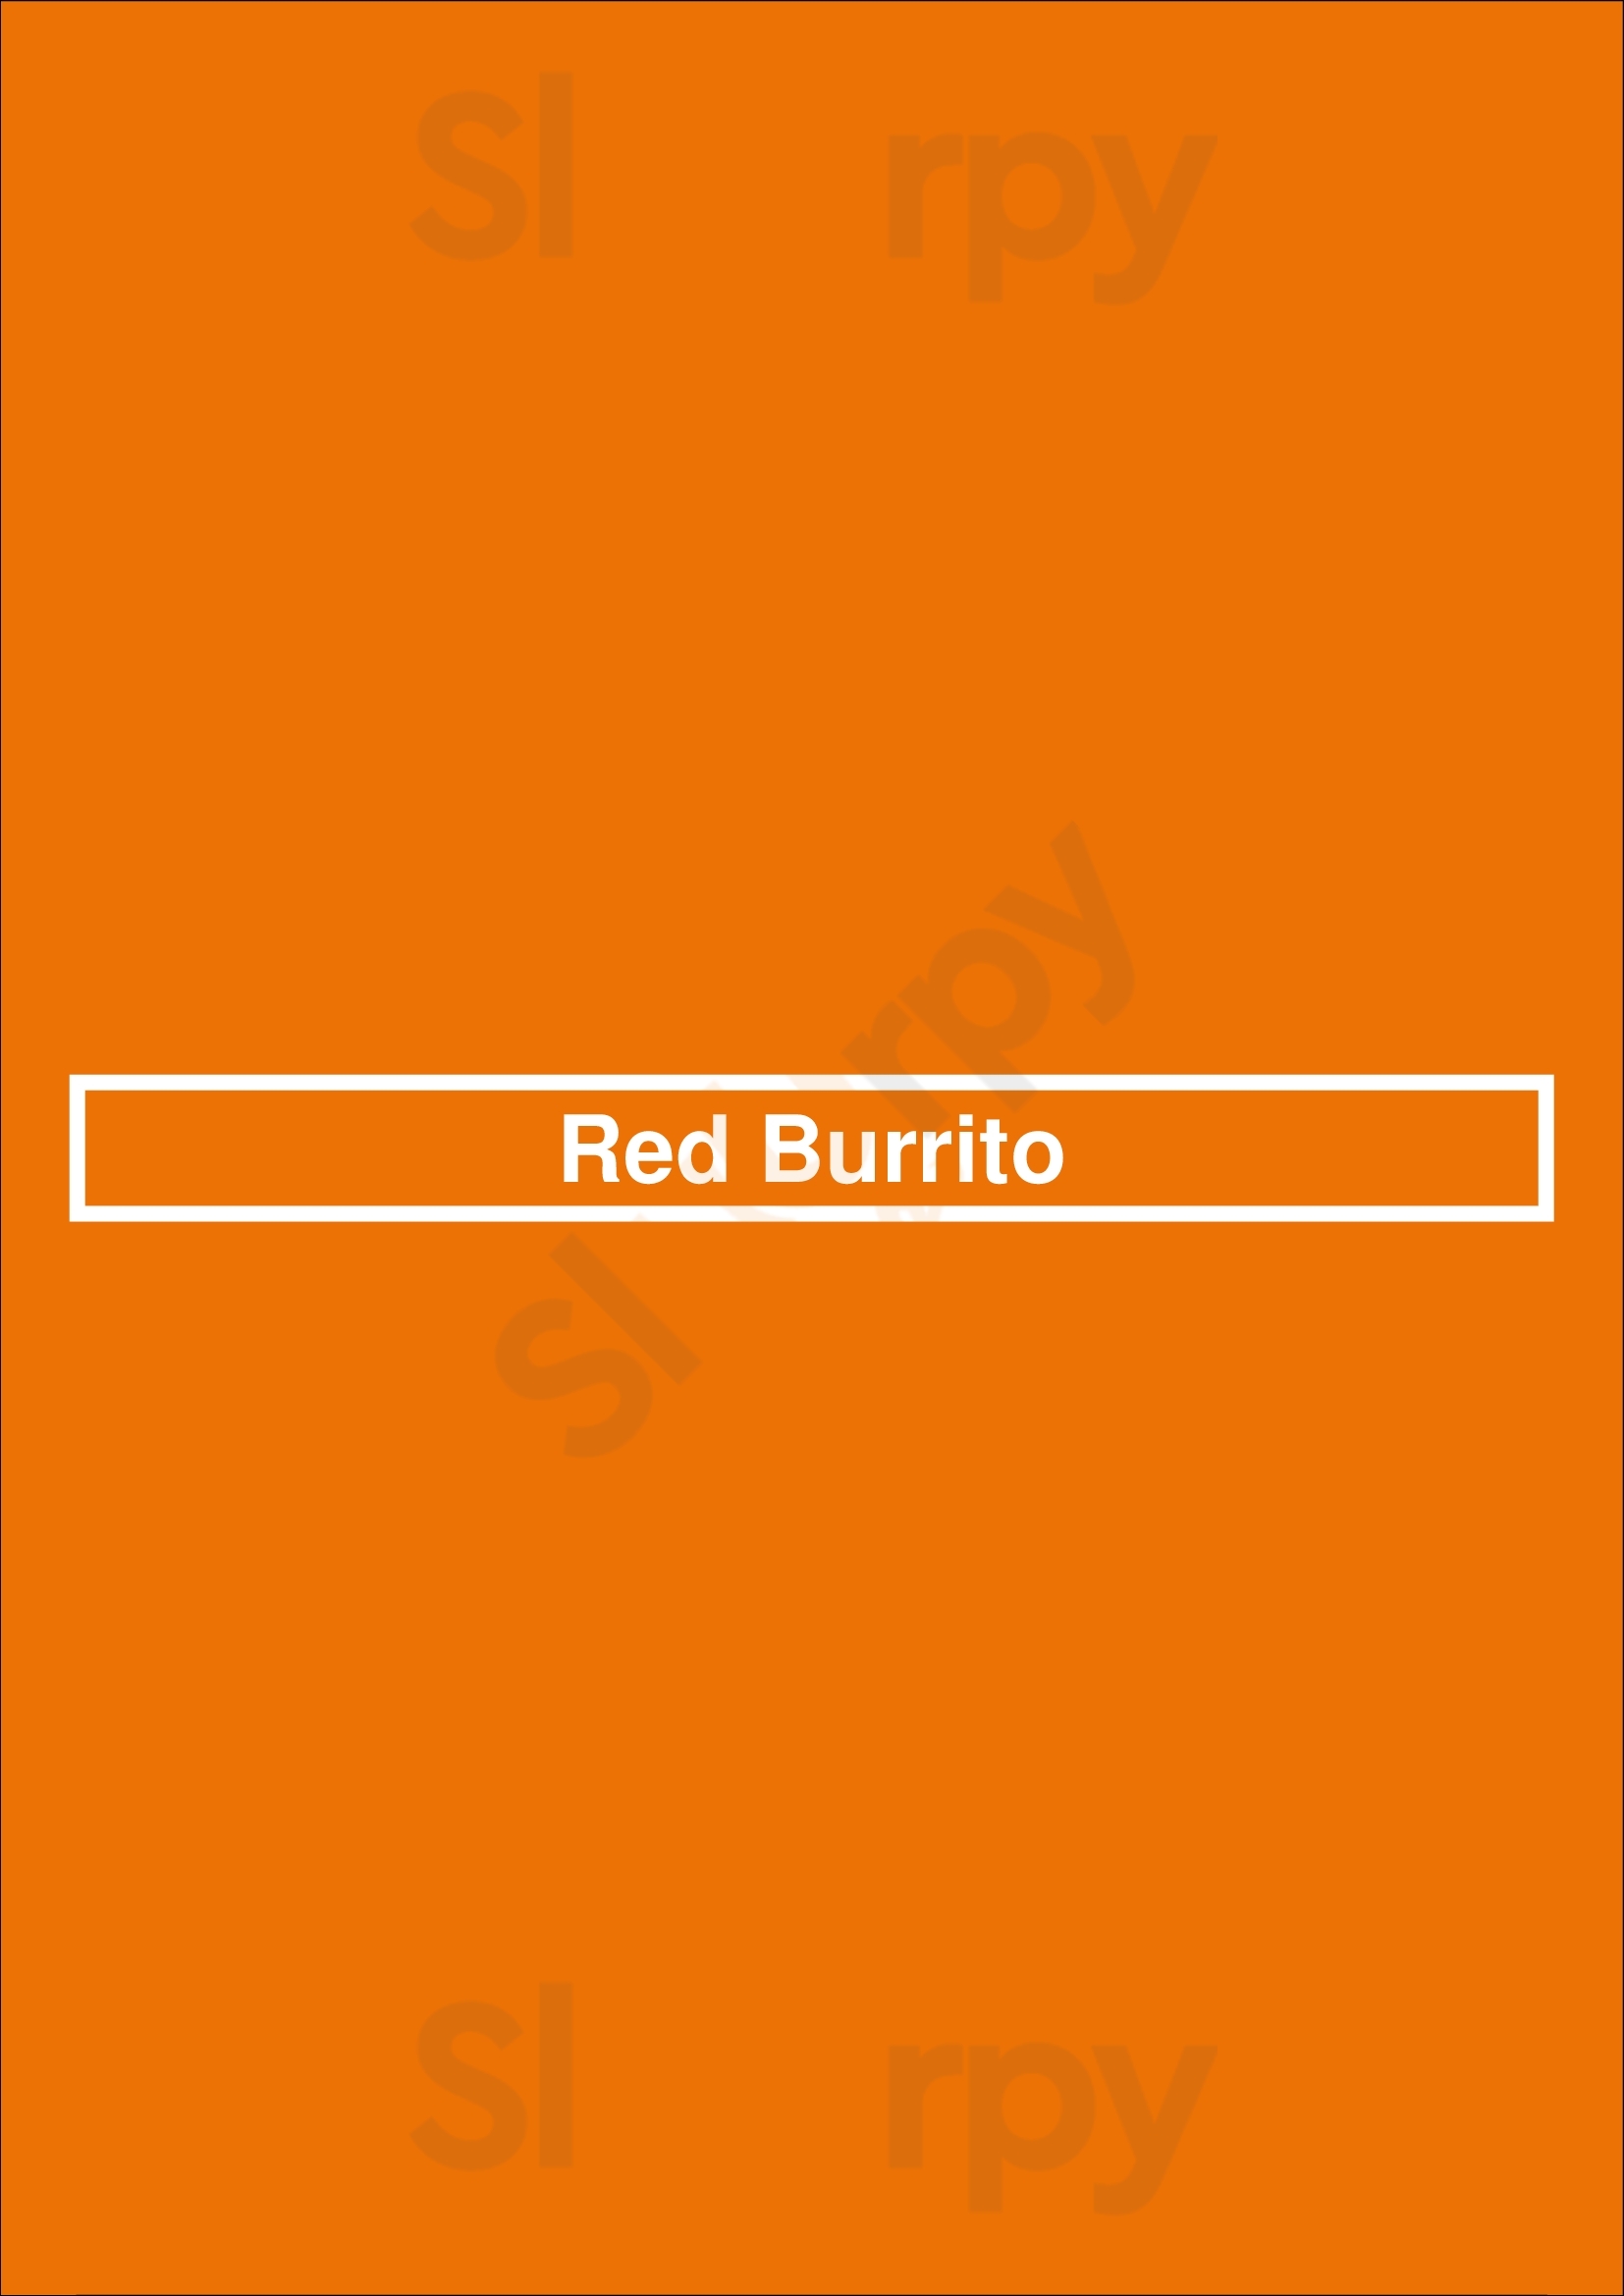 Red Burrito Vancouver Menu - 1